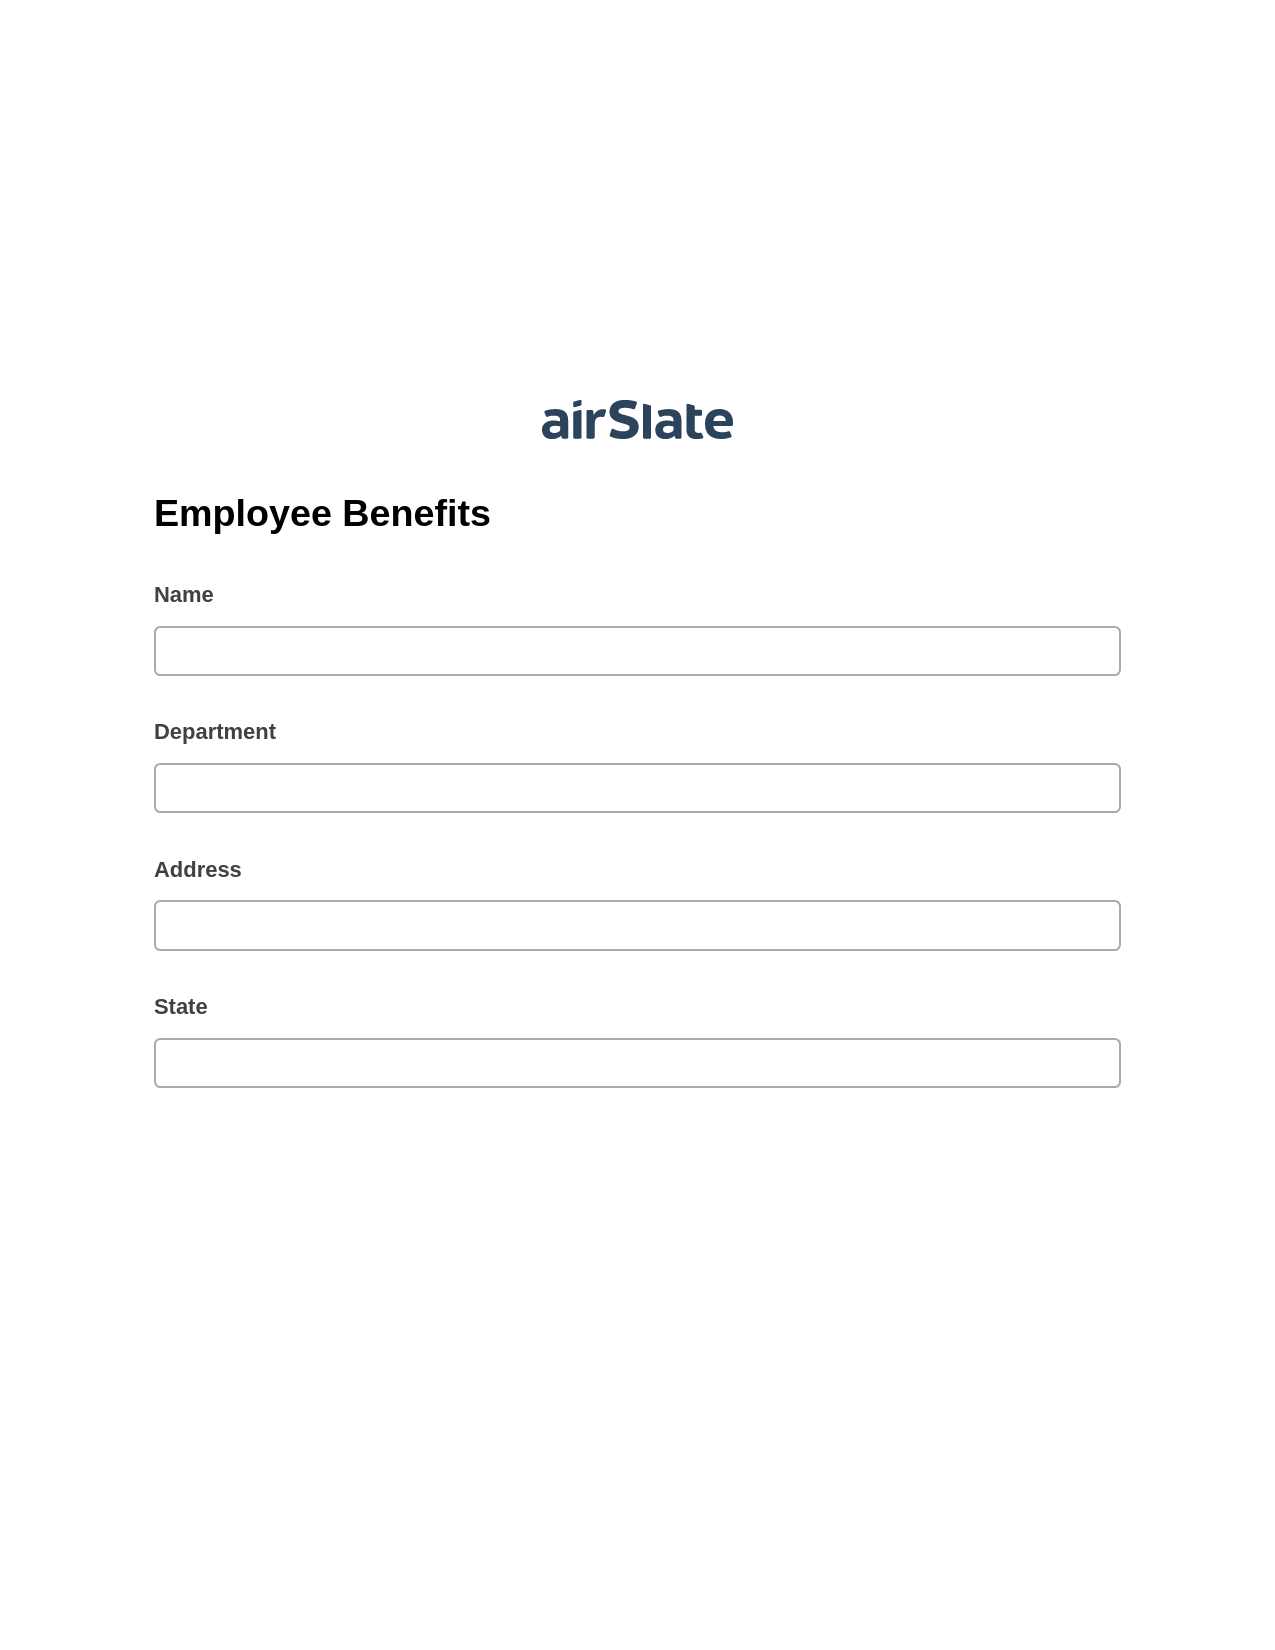 Multirole Employee Benefits Pre-fill from CSV File Bot, Set Signature Type Bot, Archive to SharePoint Folder Bot